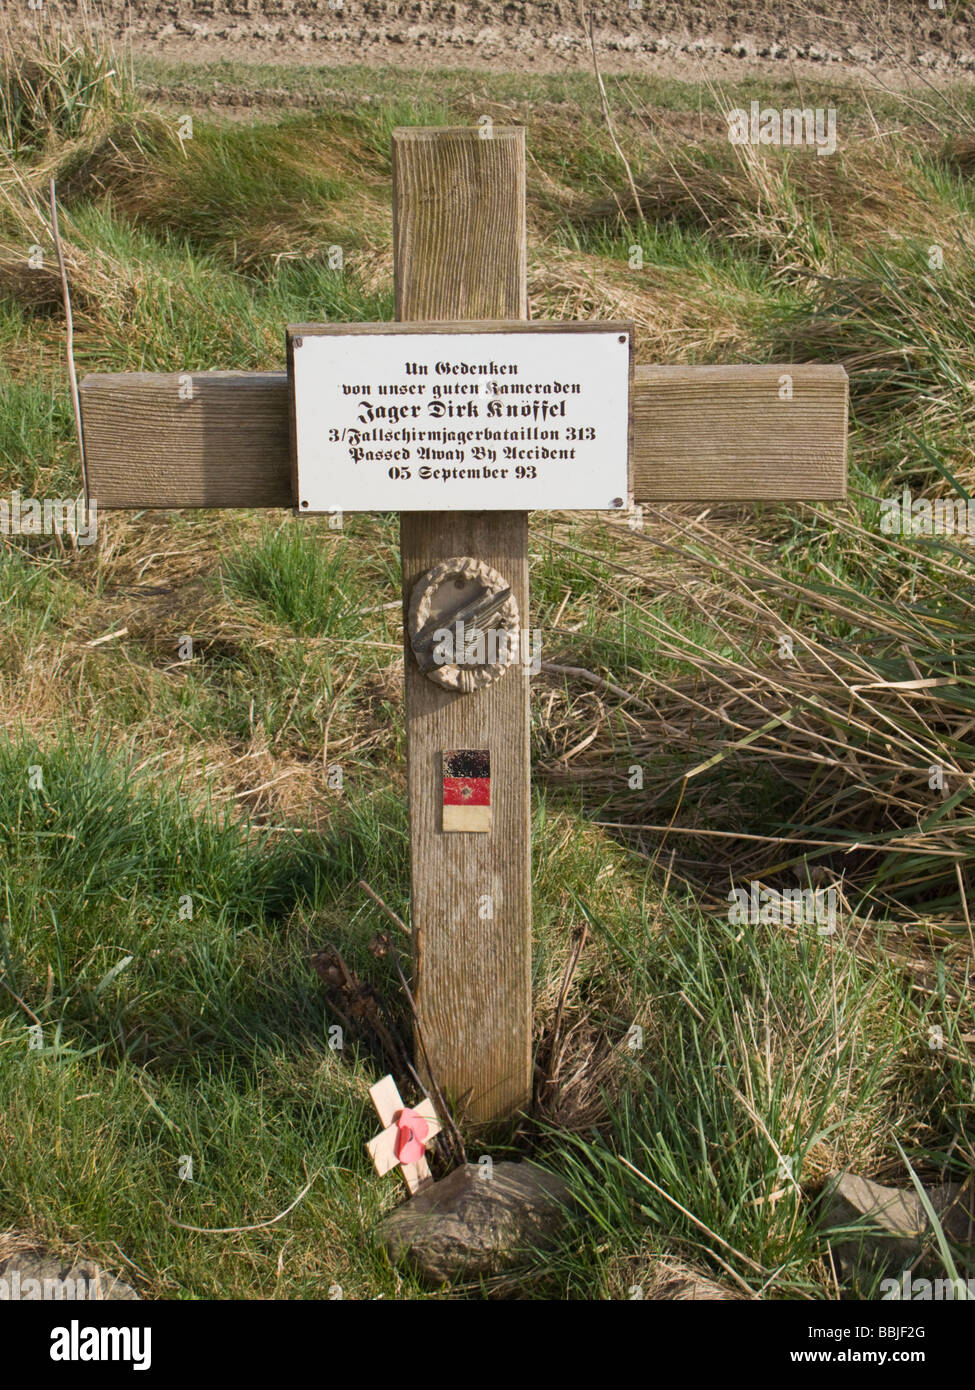 soldier killed salisbury plain - photo #35